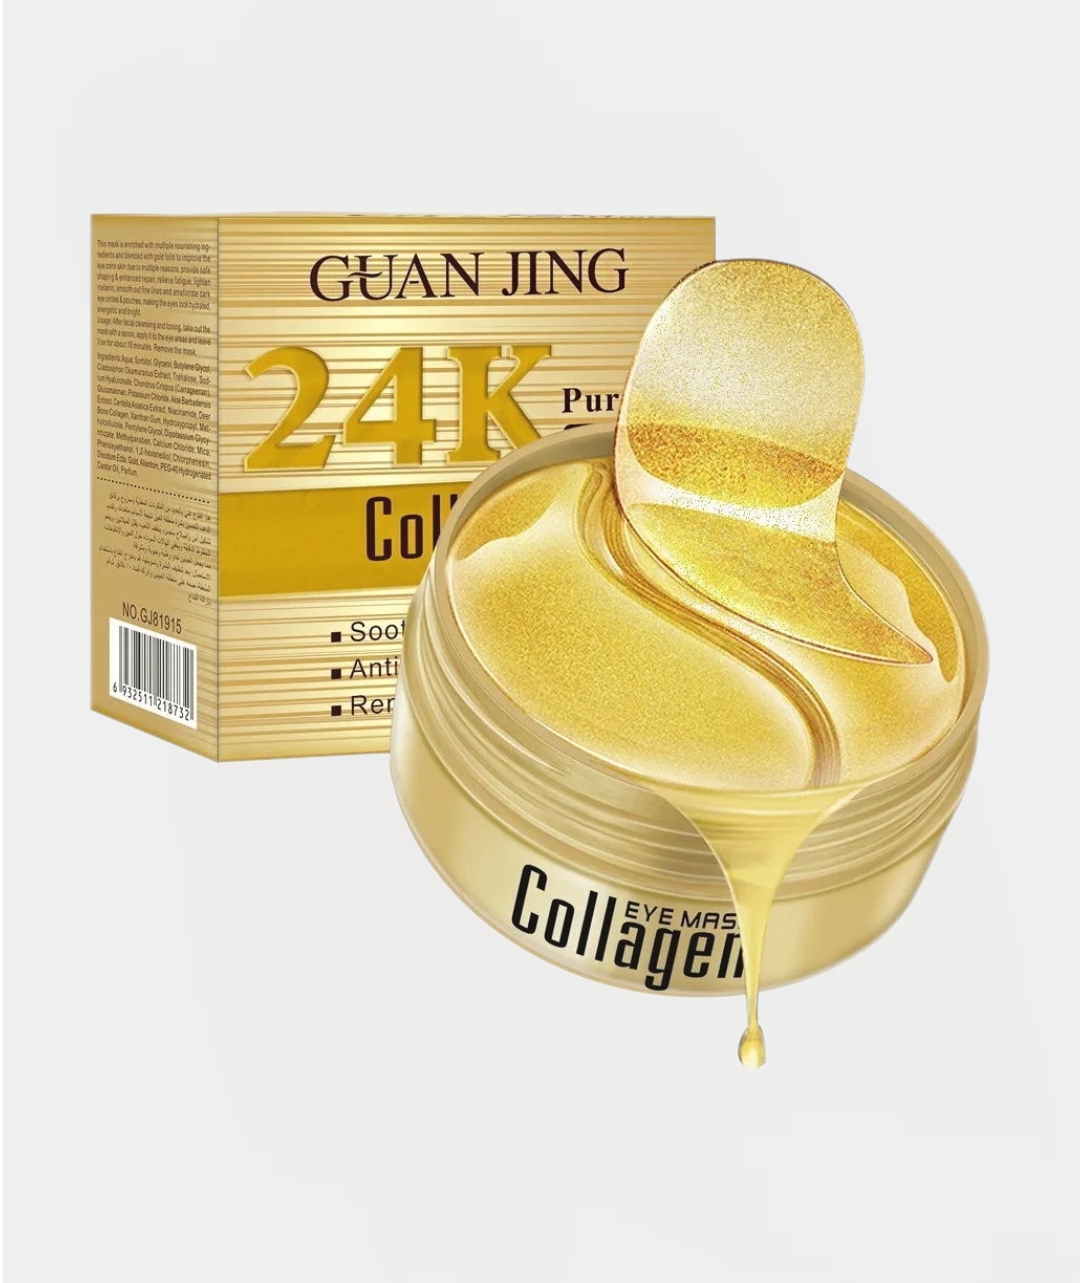 24k gold отзывы. Guanjing 24k Pure Gold Collagen. 24k Pure Gold Eye Mask Collagen. Маска Gold Collagen Золотая для лица 24 k. 24k Gold Collagen Eye Mask.